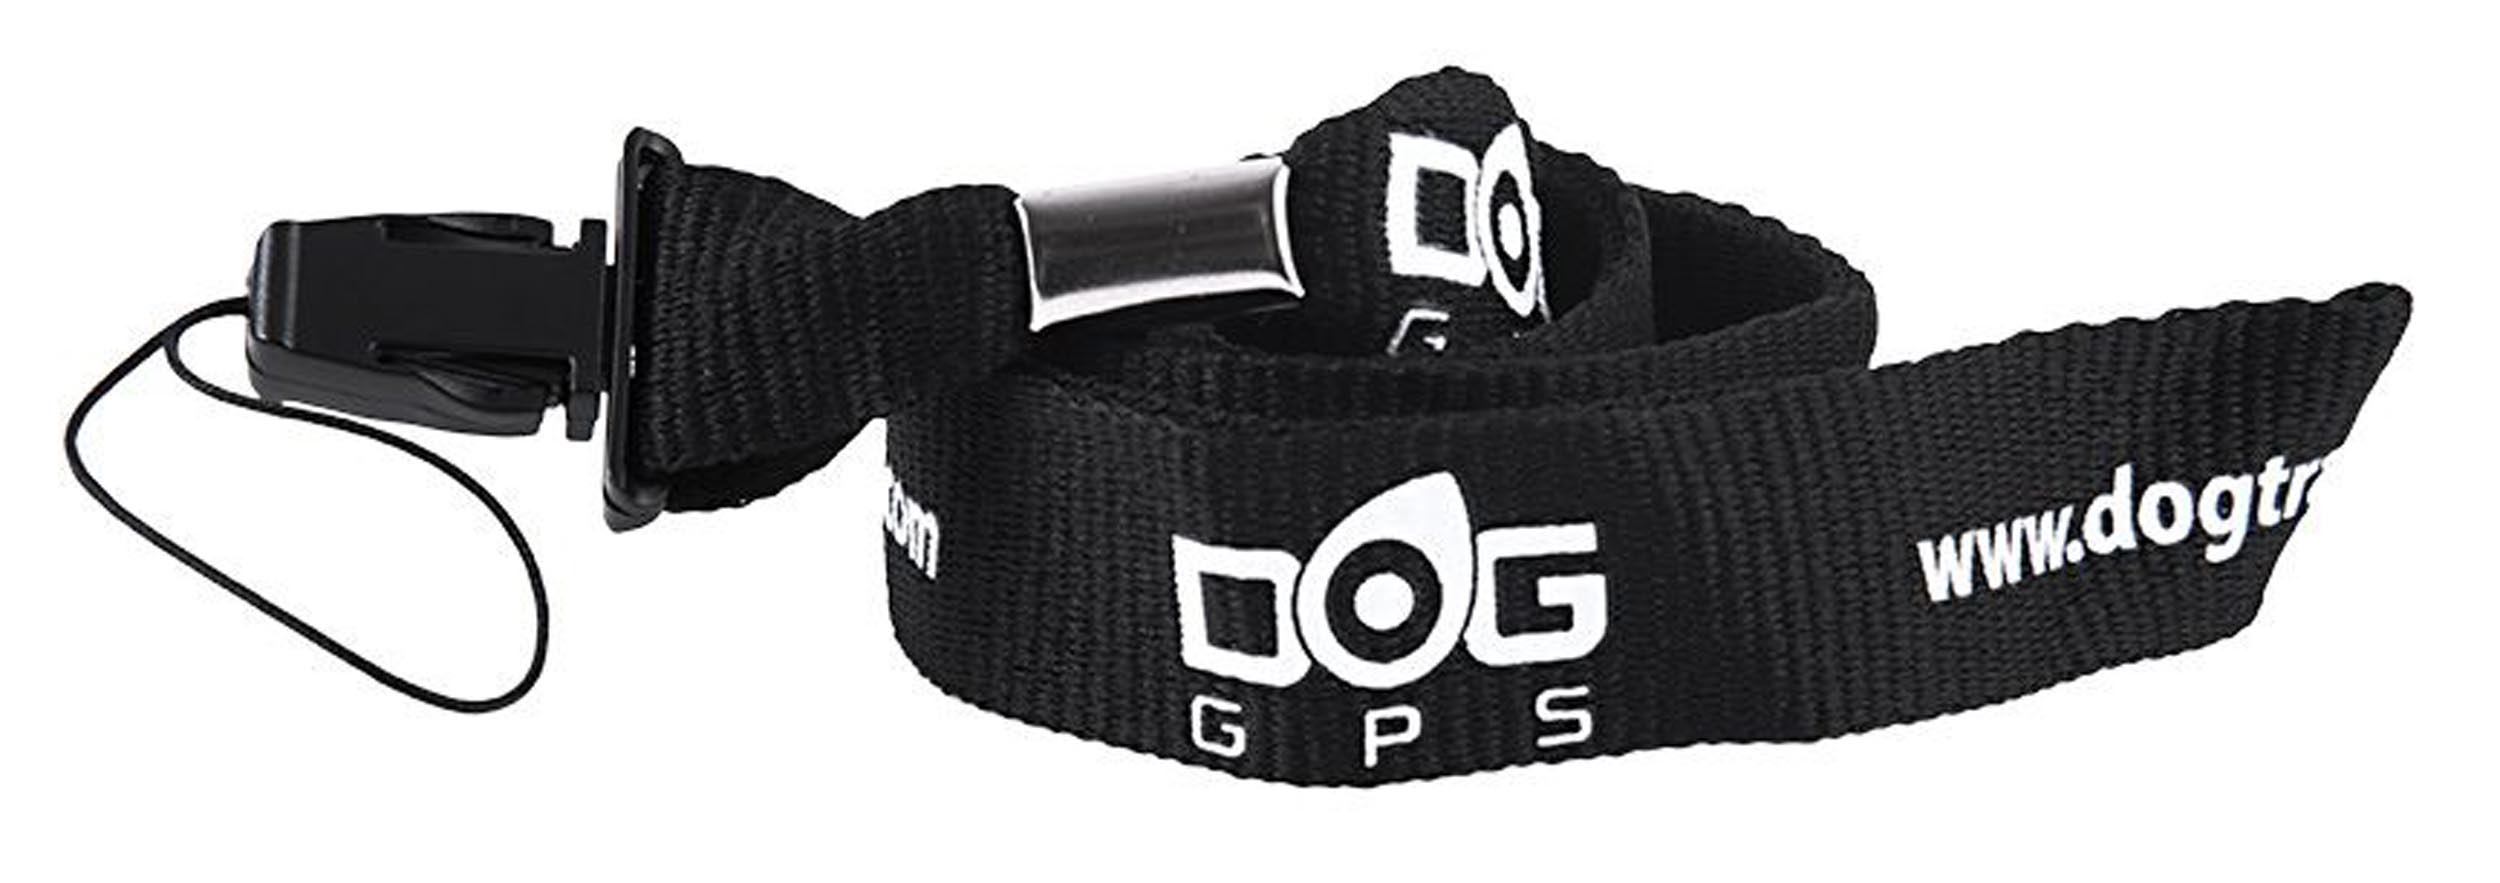 CH963108-06 Collier GPS, Beeper et Dressage pour chiens DogTrace X30TB